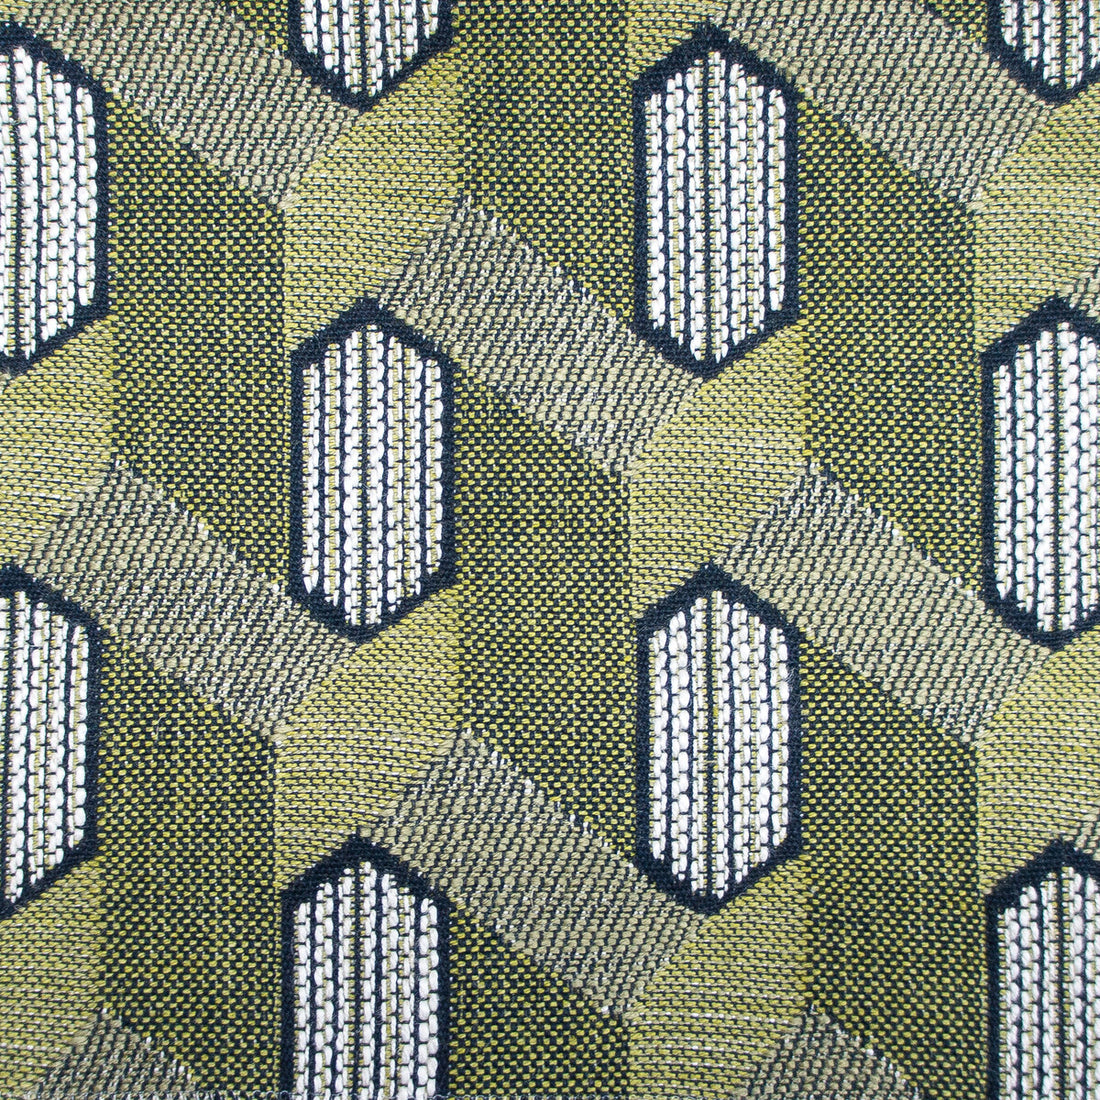 Maya fabric in verde color - pattern GDT5568.002.0 - by Gaston y Daniela in the Gaston Nuevo Mundo collection